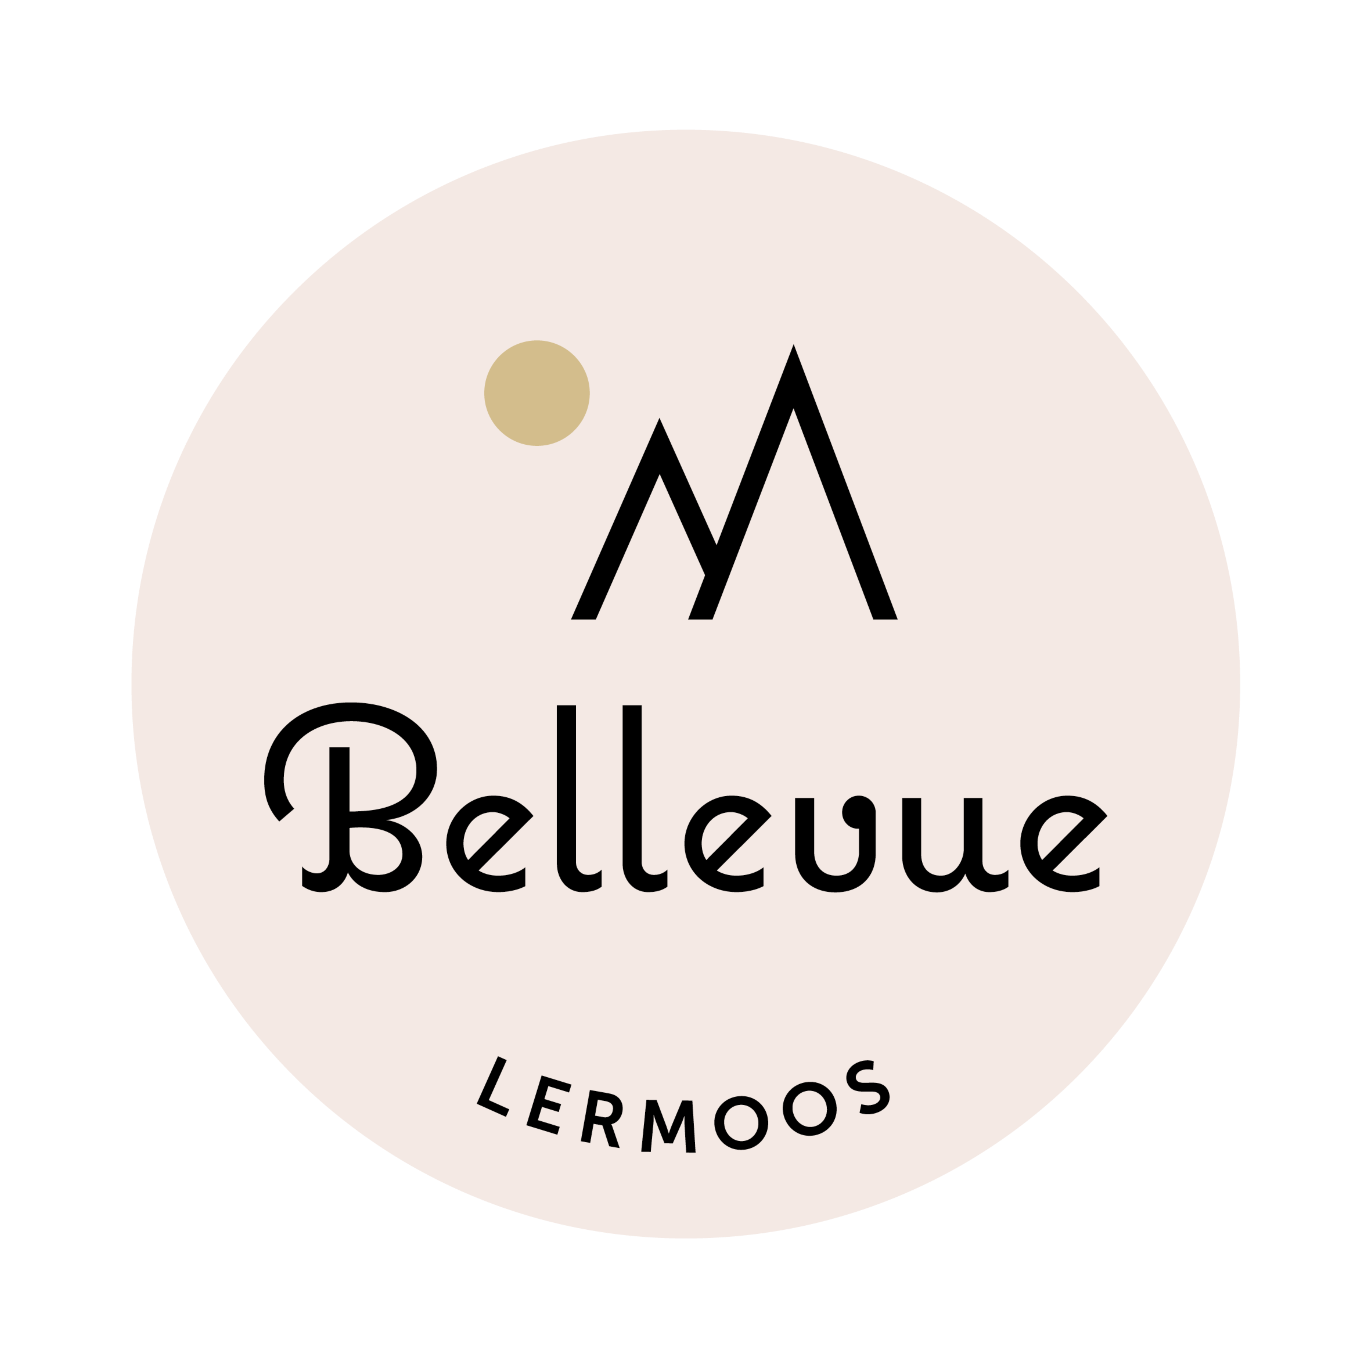 Bellevue Hotel In Lermoos, Austria With Breath-Taking Mountain Views Now Open